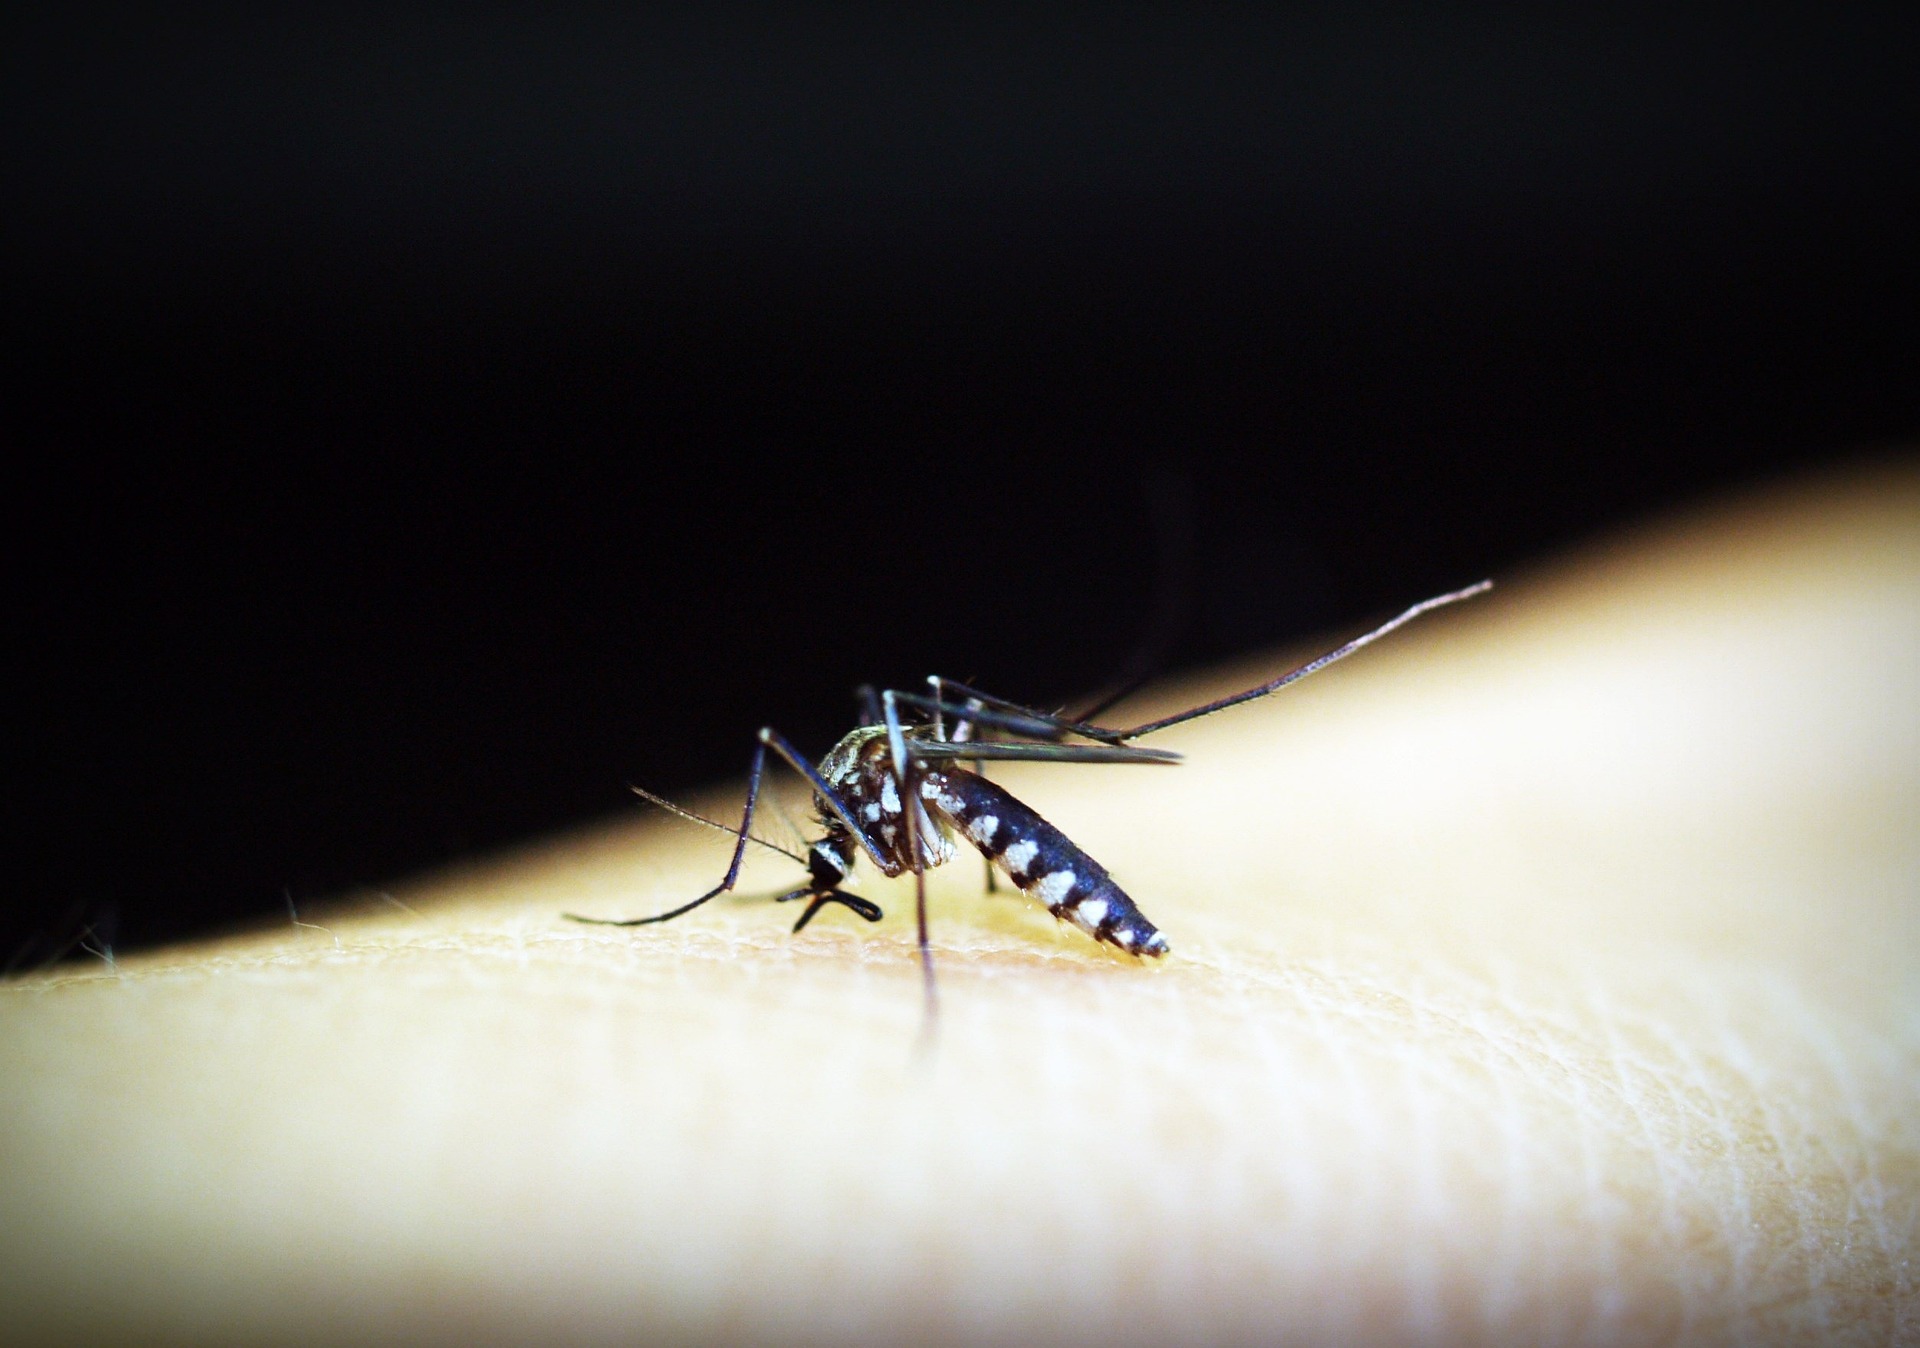 Malaria: Causes, Symptoms, and Treatment